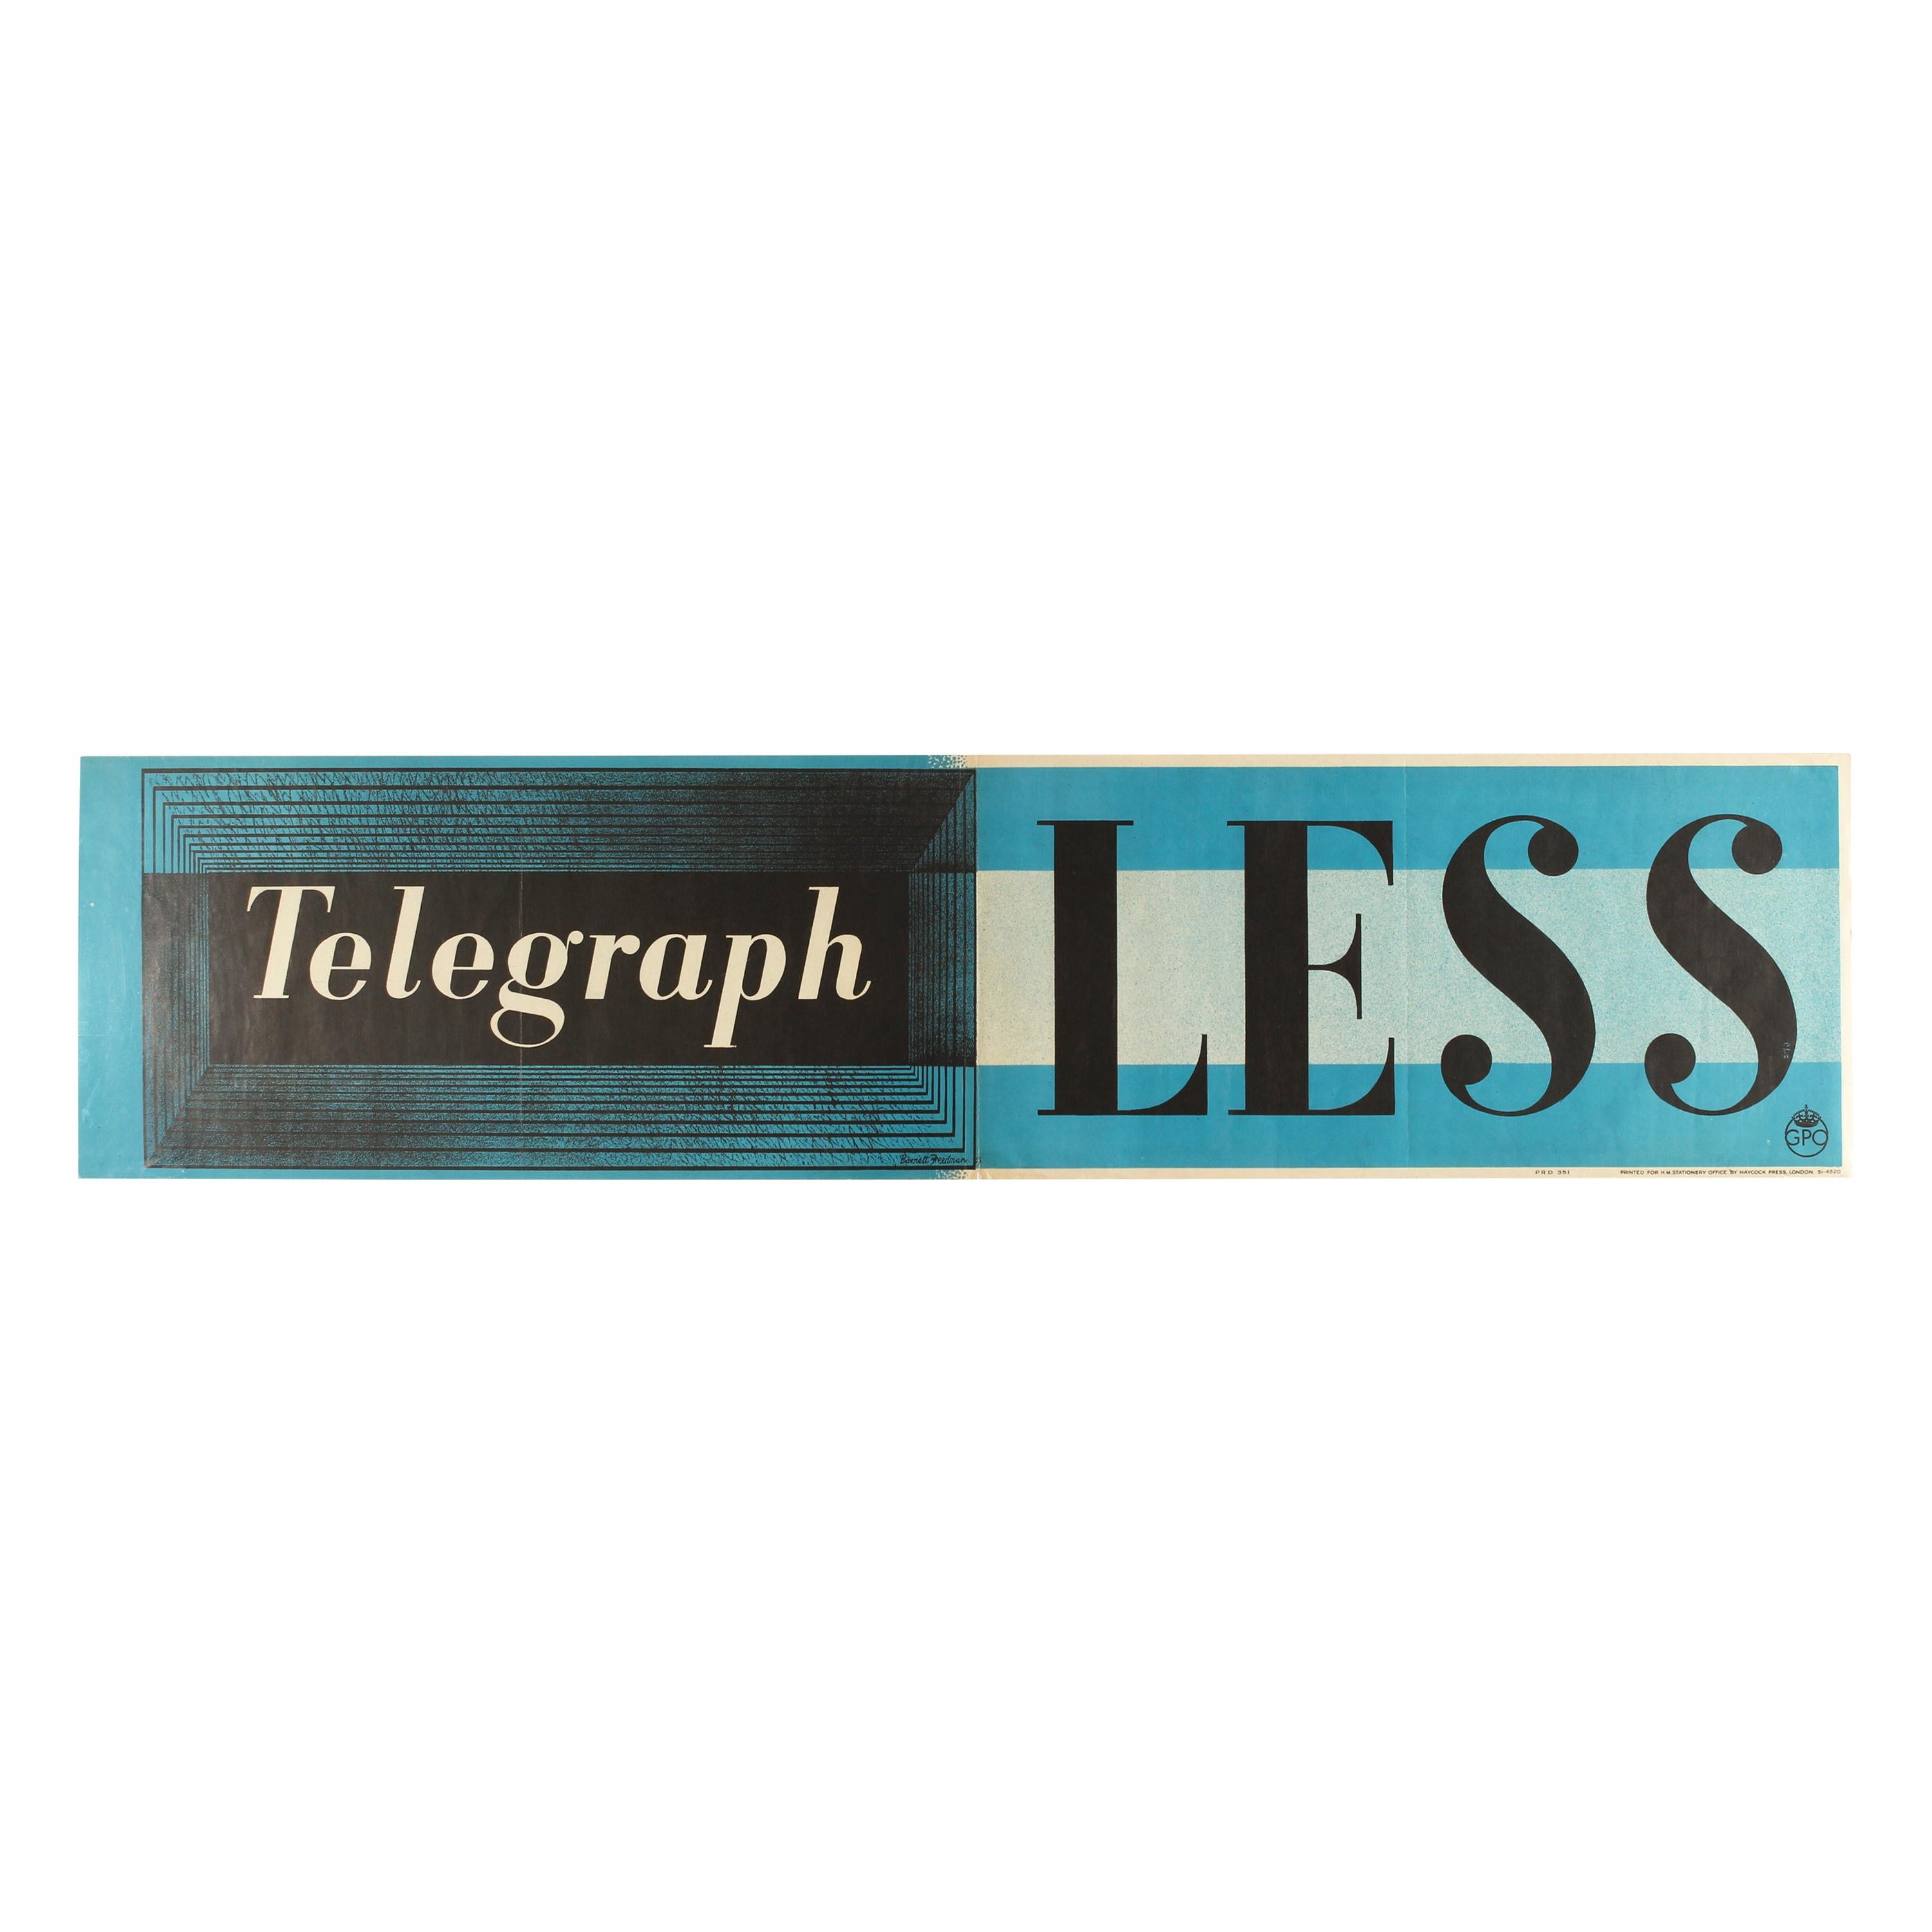 Original-Vintage-Poster Telegraph Less GPO Post Office WWII Modernistische Typografie